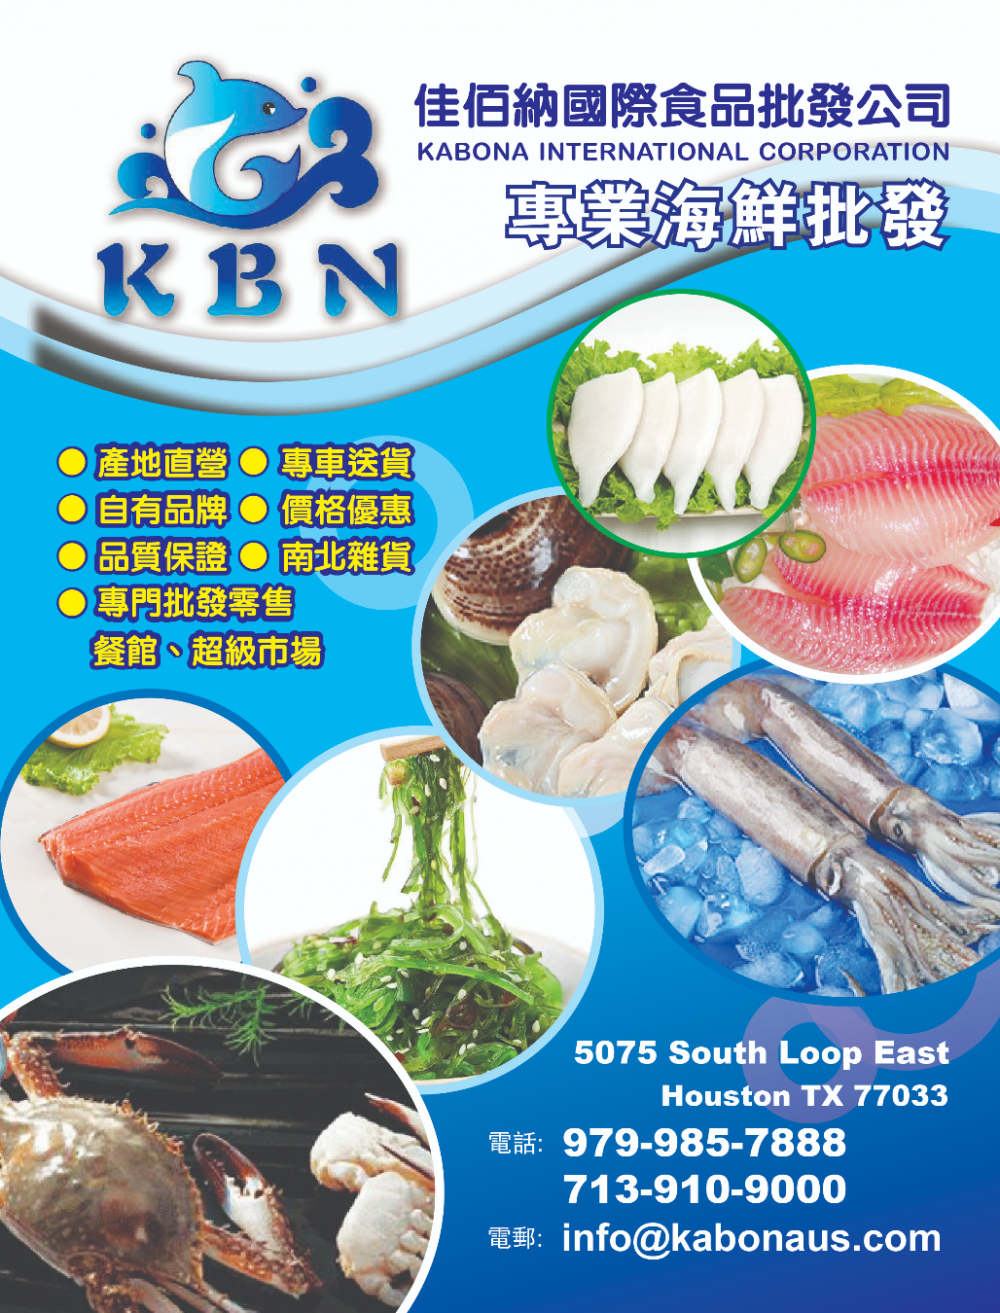 Kobona International 佳佰纳国际食品批发公司 专业海鲜批发